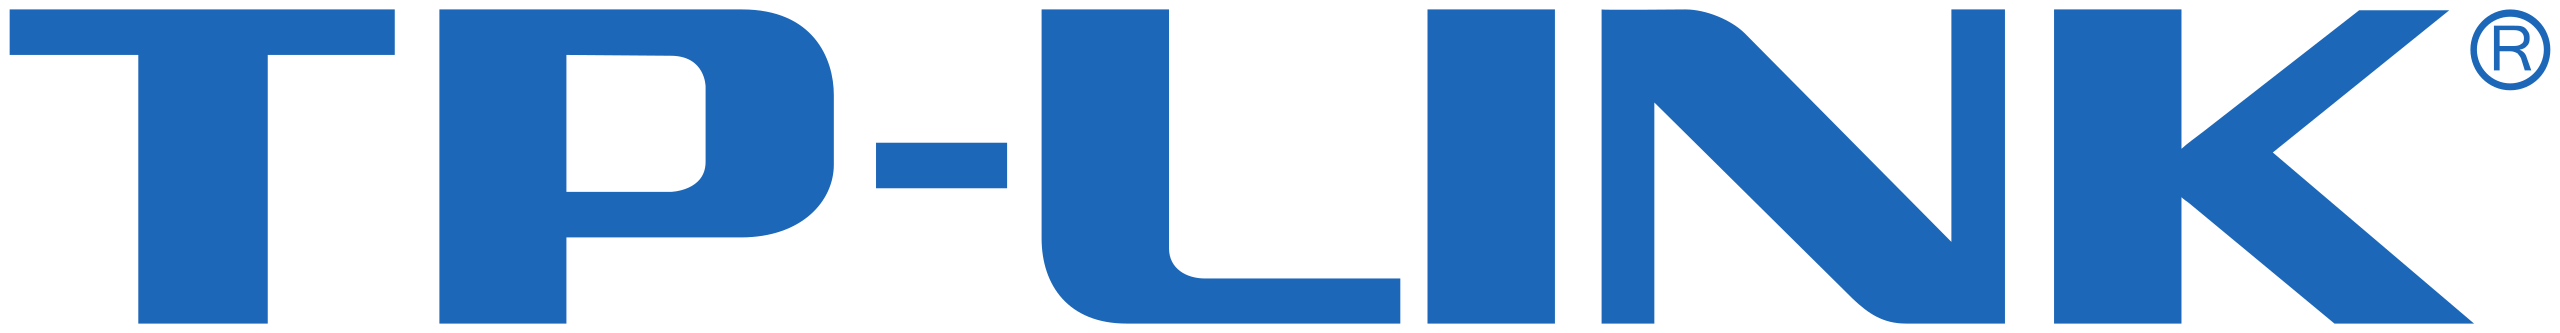 VETRINA-TPLINK-logo